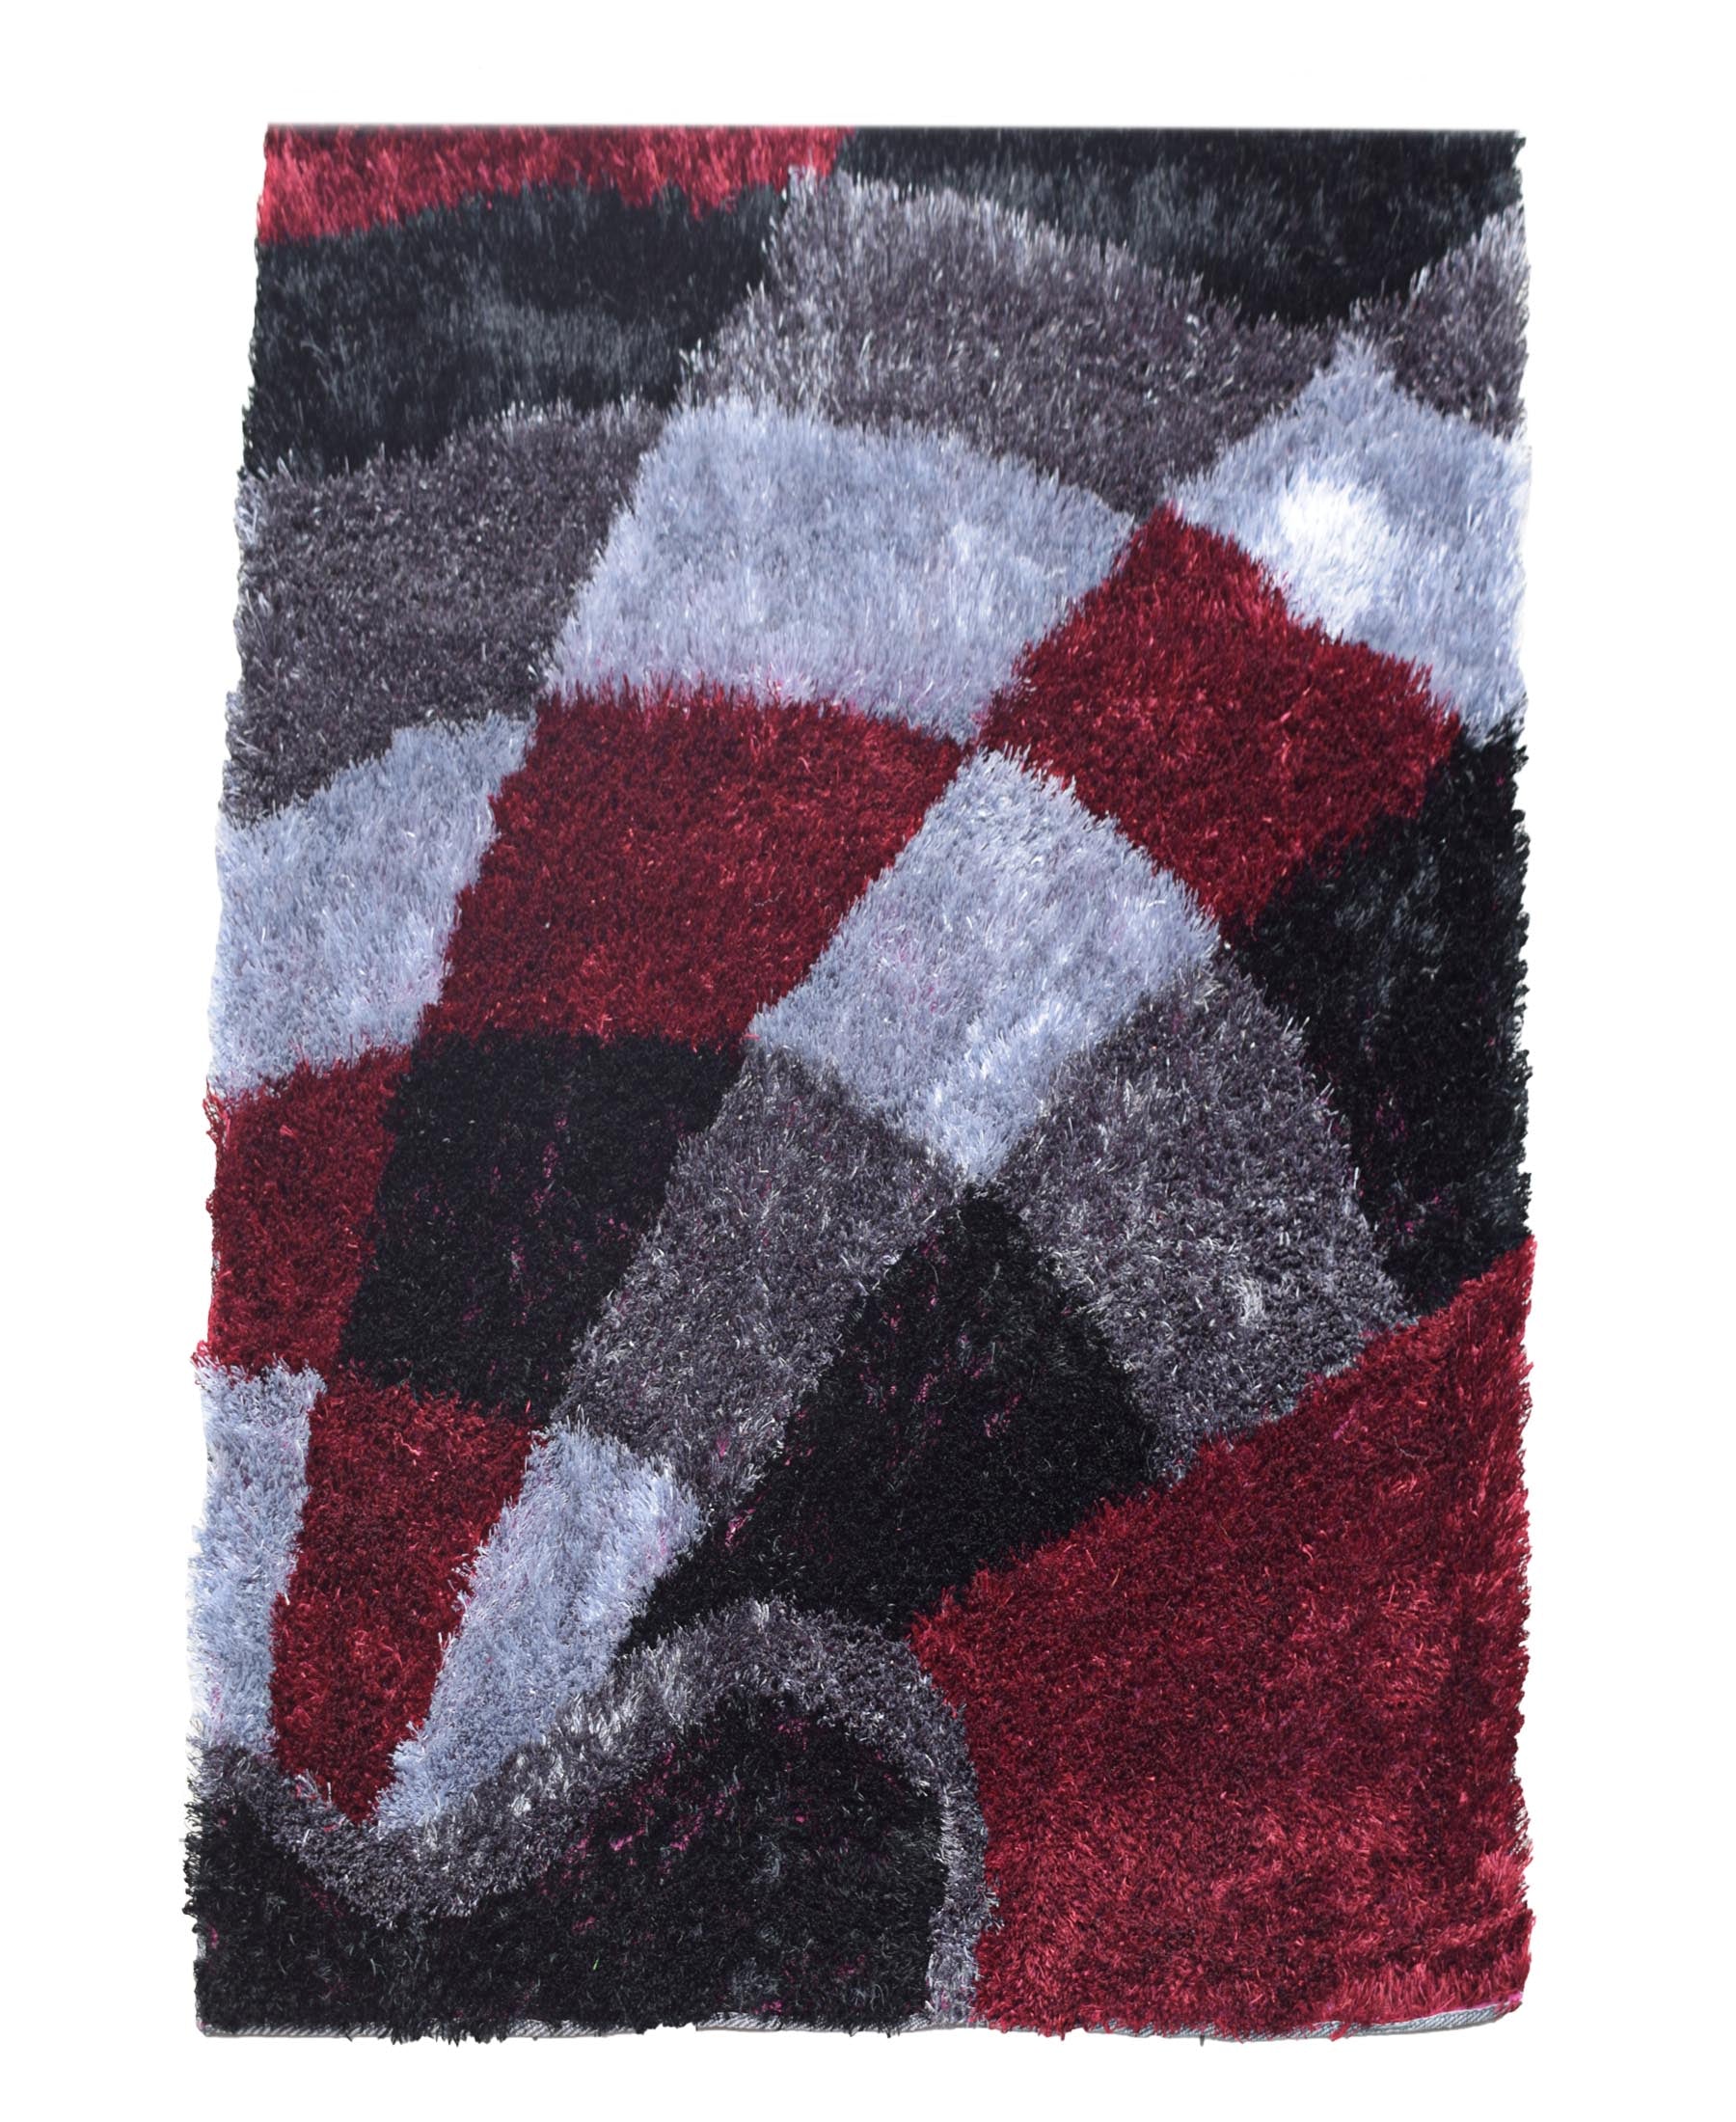 Shaggy Checkered Carpet 500mm x 800mm - Red, Grey & Black